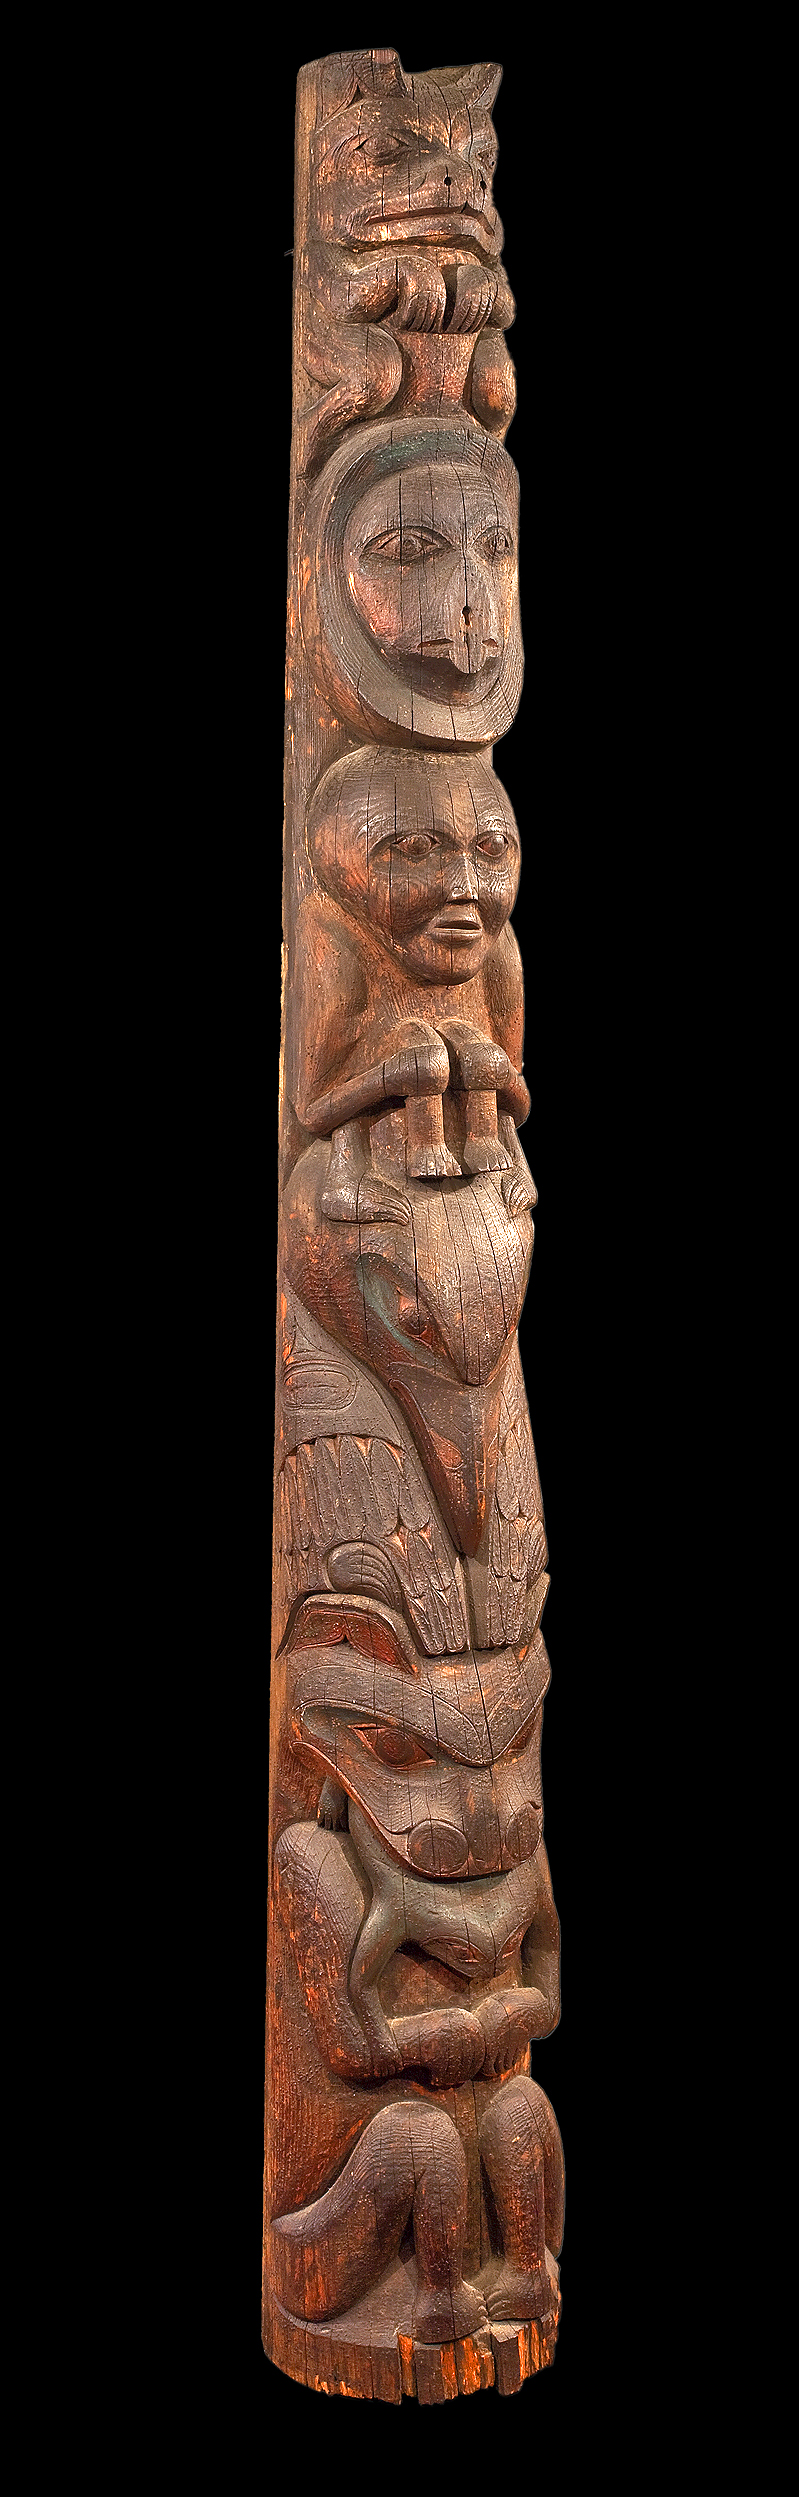 Tsimshian or Haida Totem Pole